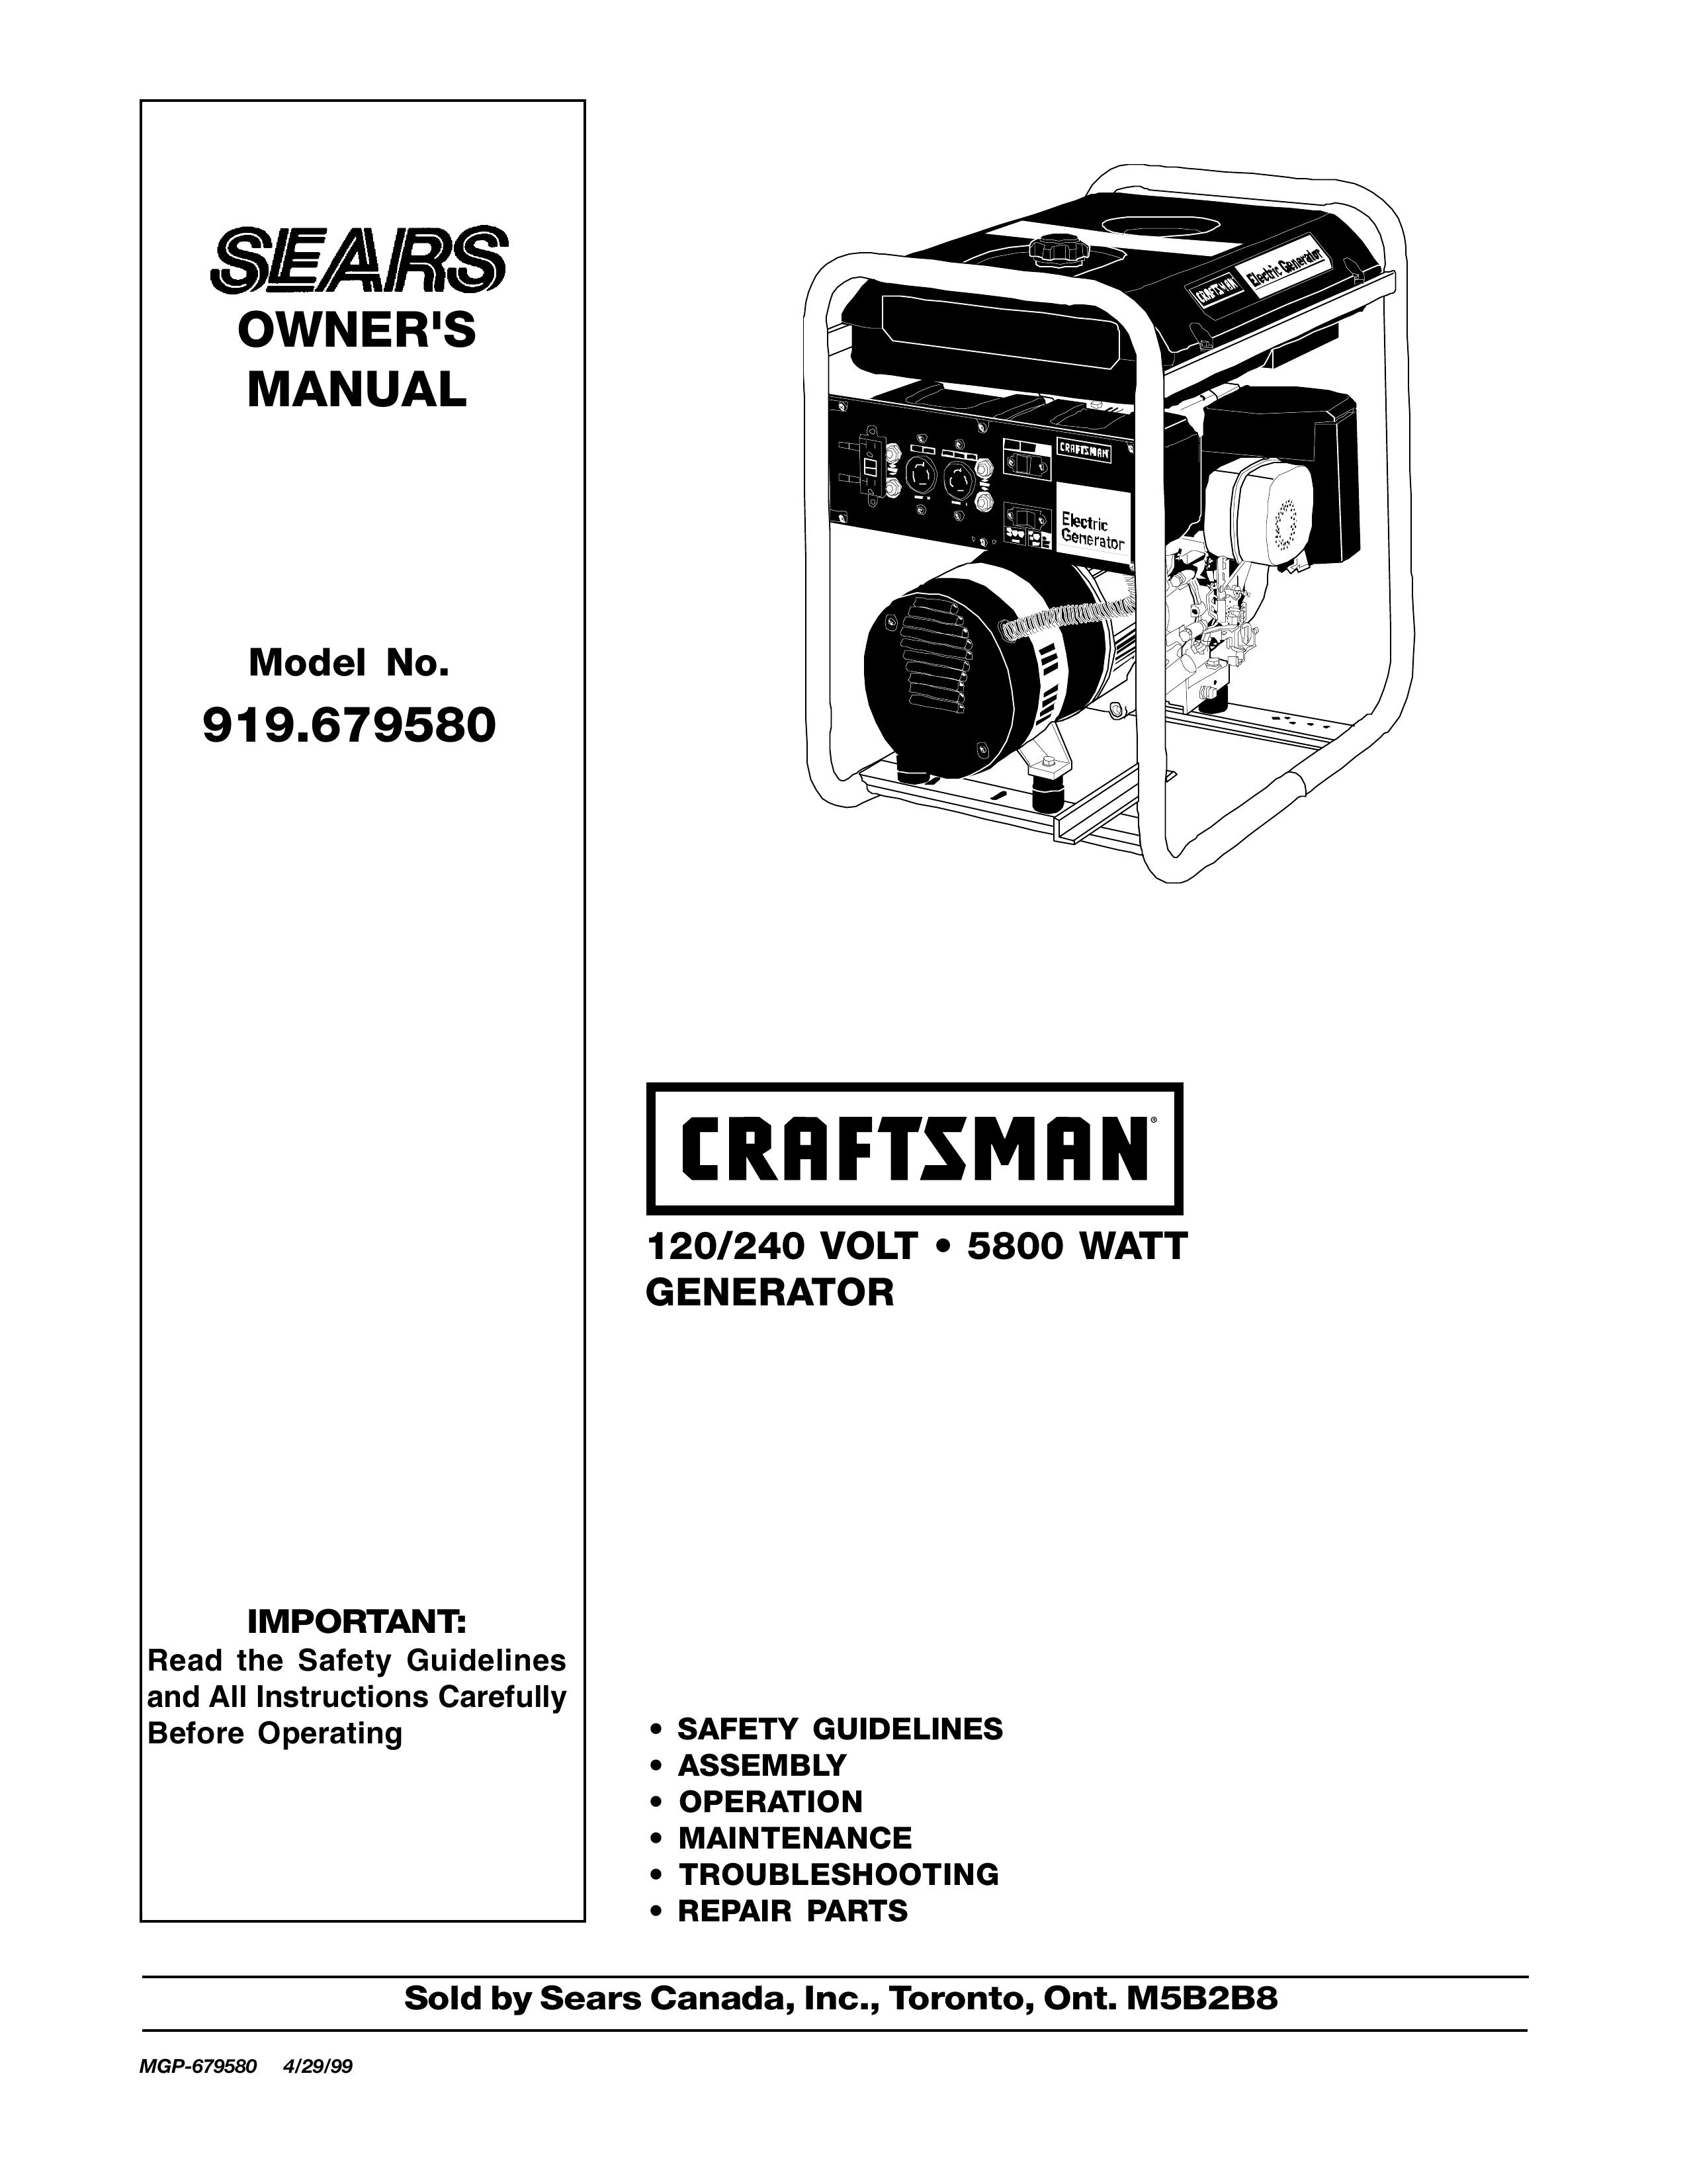 Craftsman MGP-679580 Portable Generator User Manual